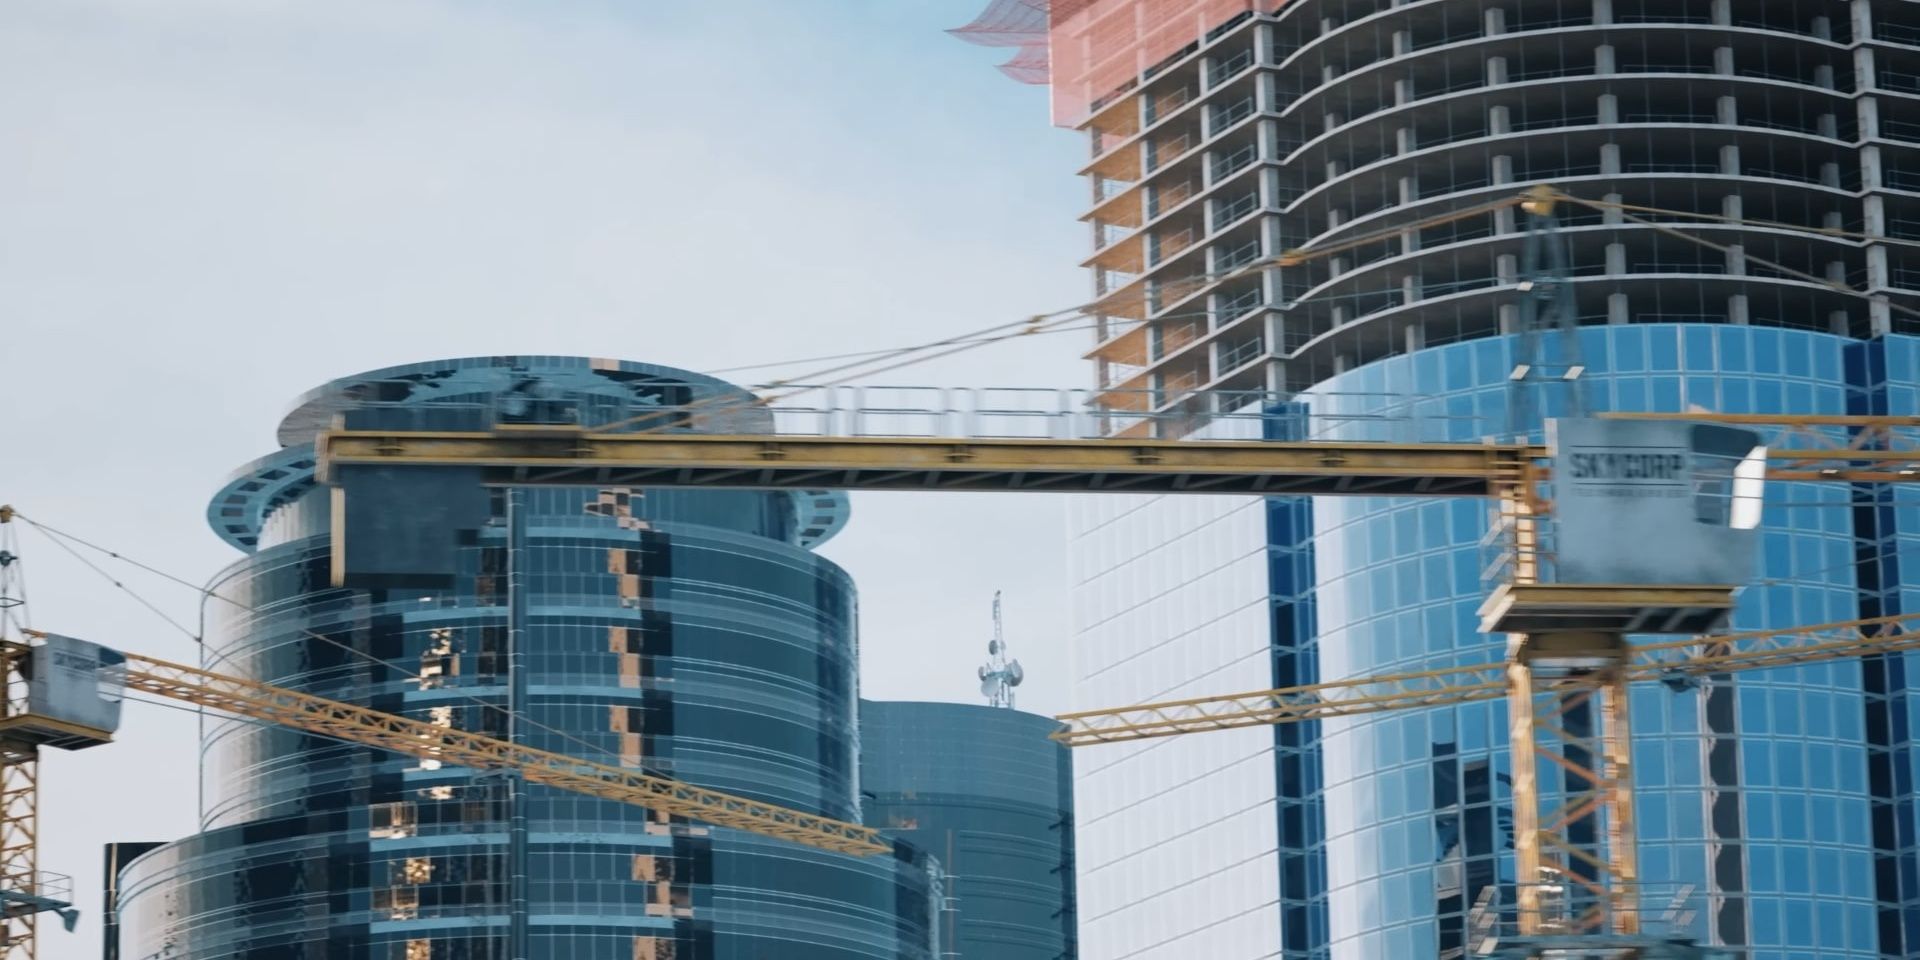 Cities: Skylines 2 Cranes Atop A Building